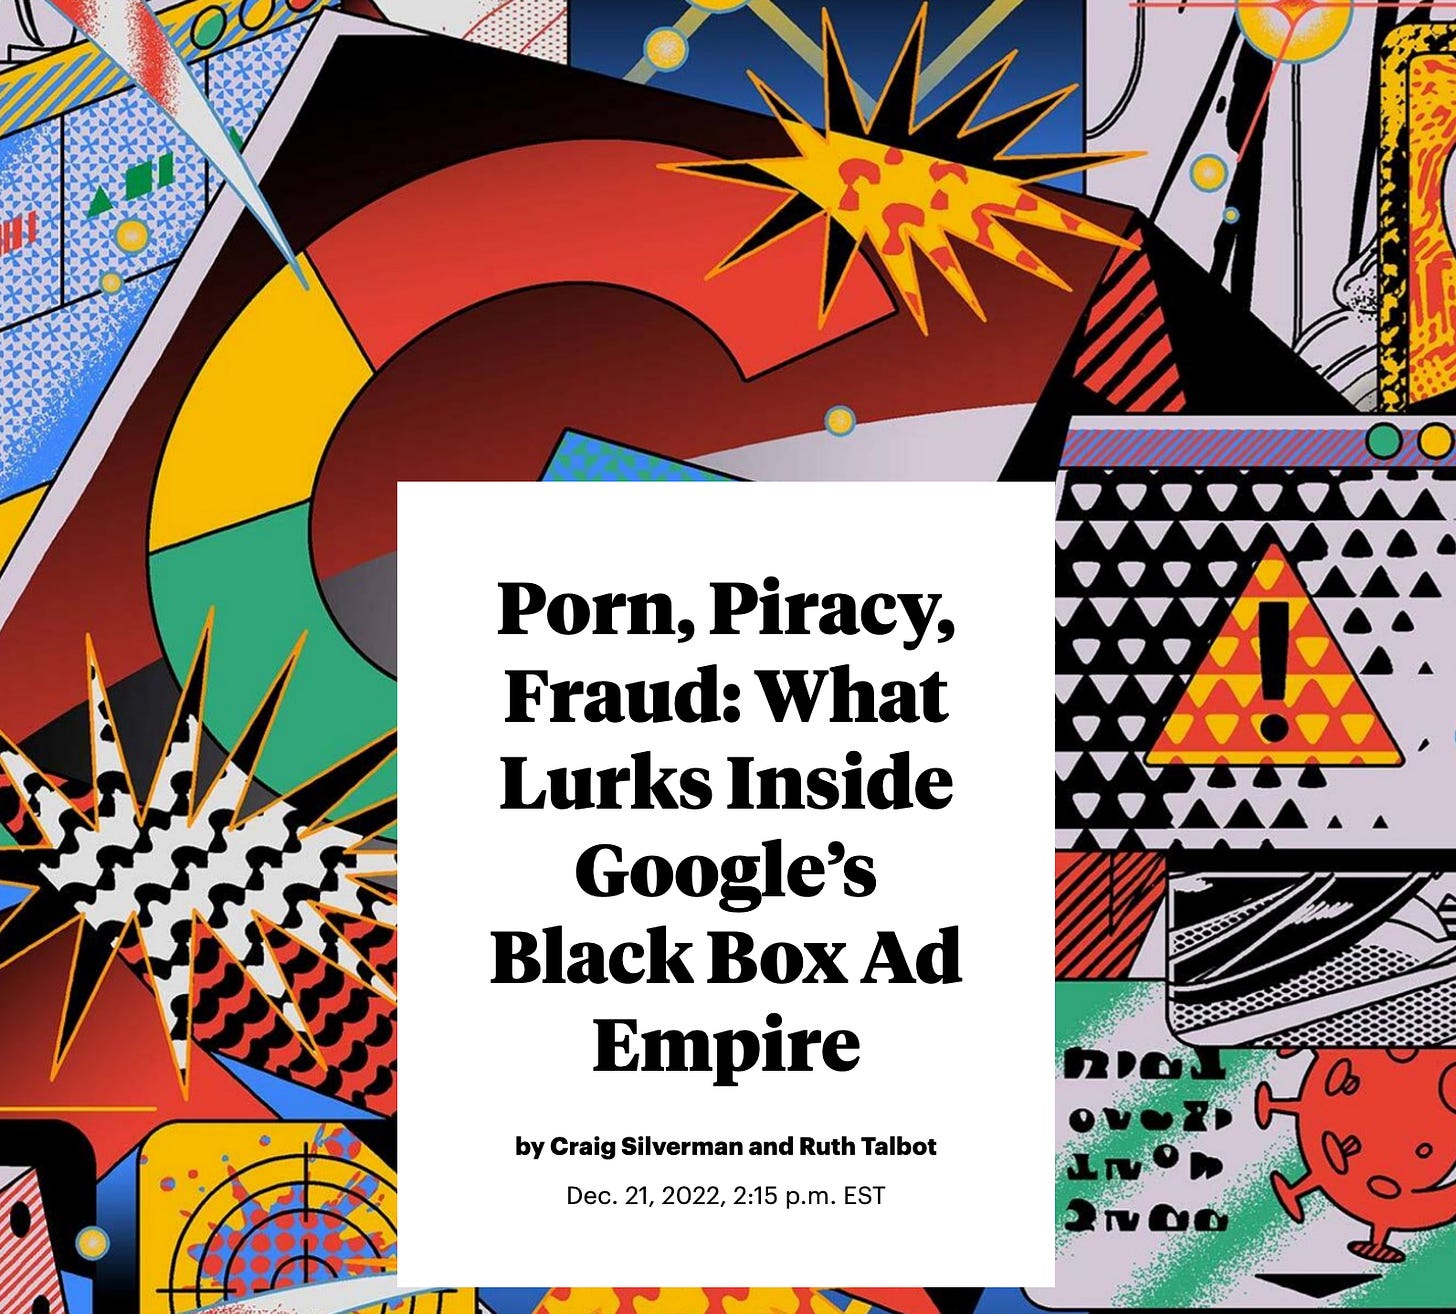 Screenshot of ProPublica article with headline "Porn, Piracy, Fraud: What Lurks Inside Google’s Black Box Ad Empire"